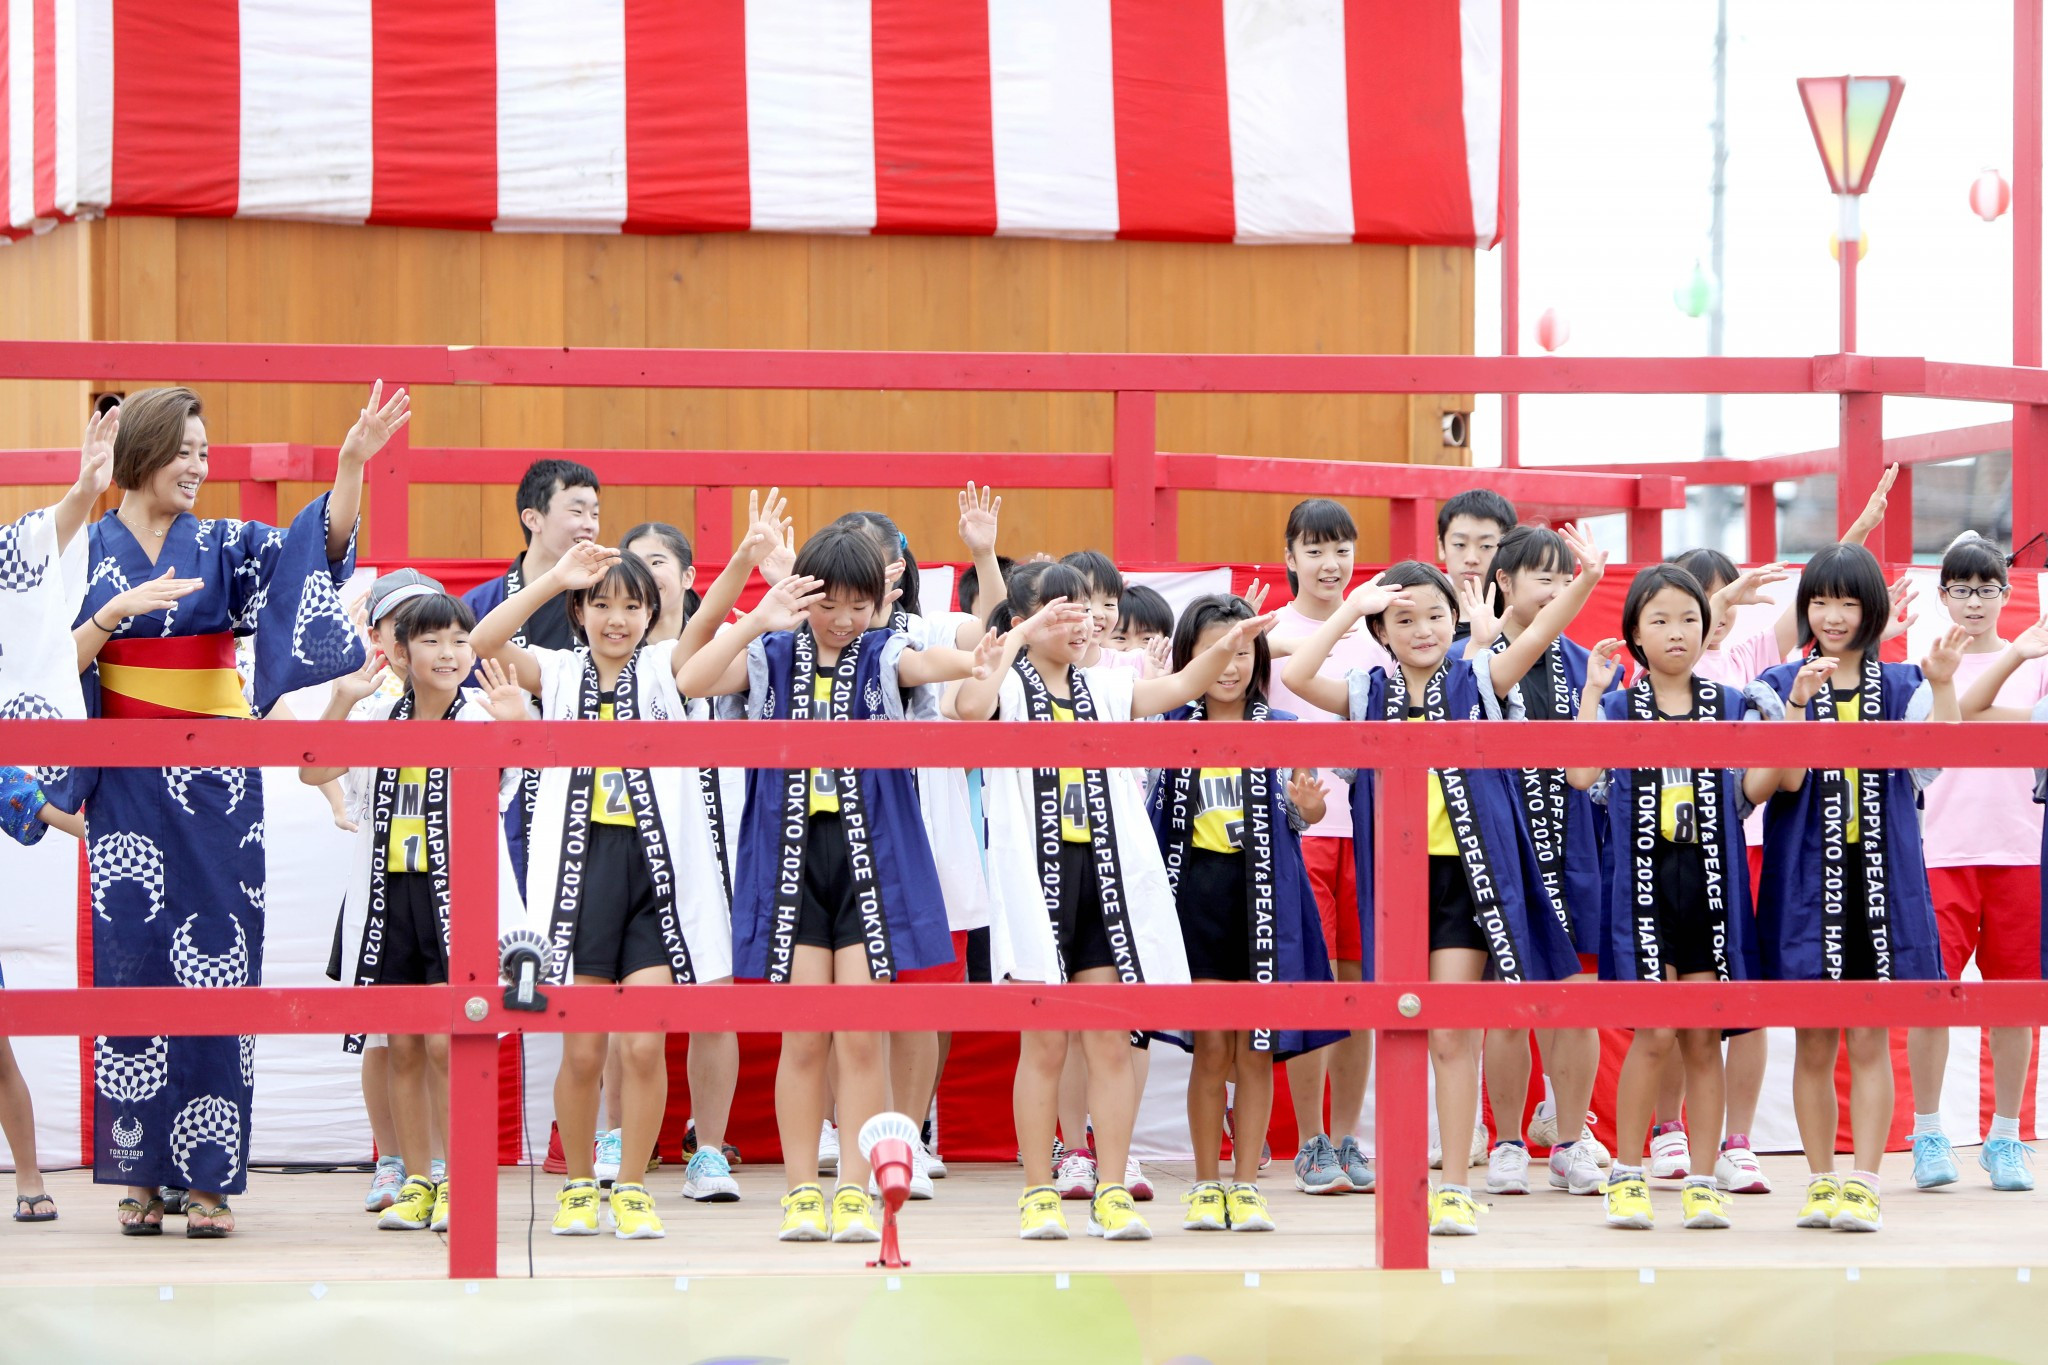 A traditional summer o-bon dance festival has taken place in Iwaki City in Fukushima ©Tokyo 2020